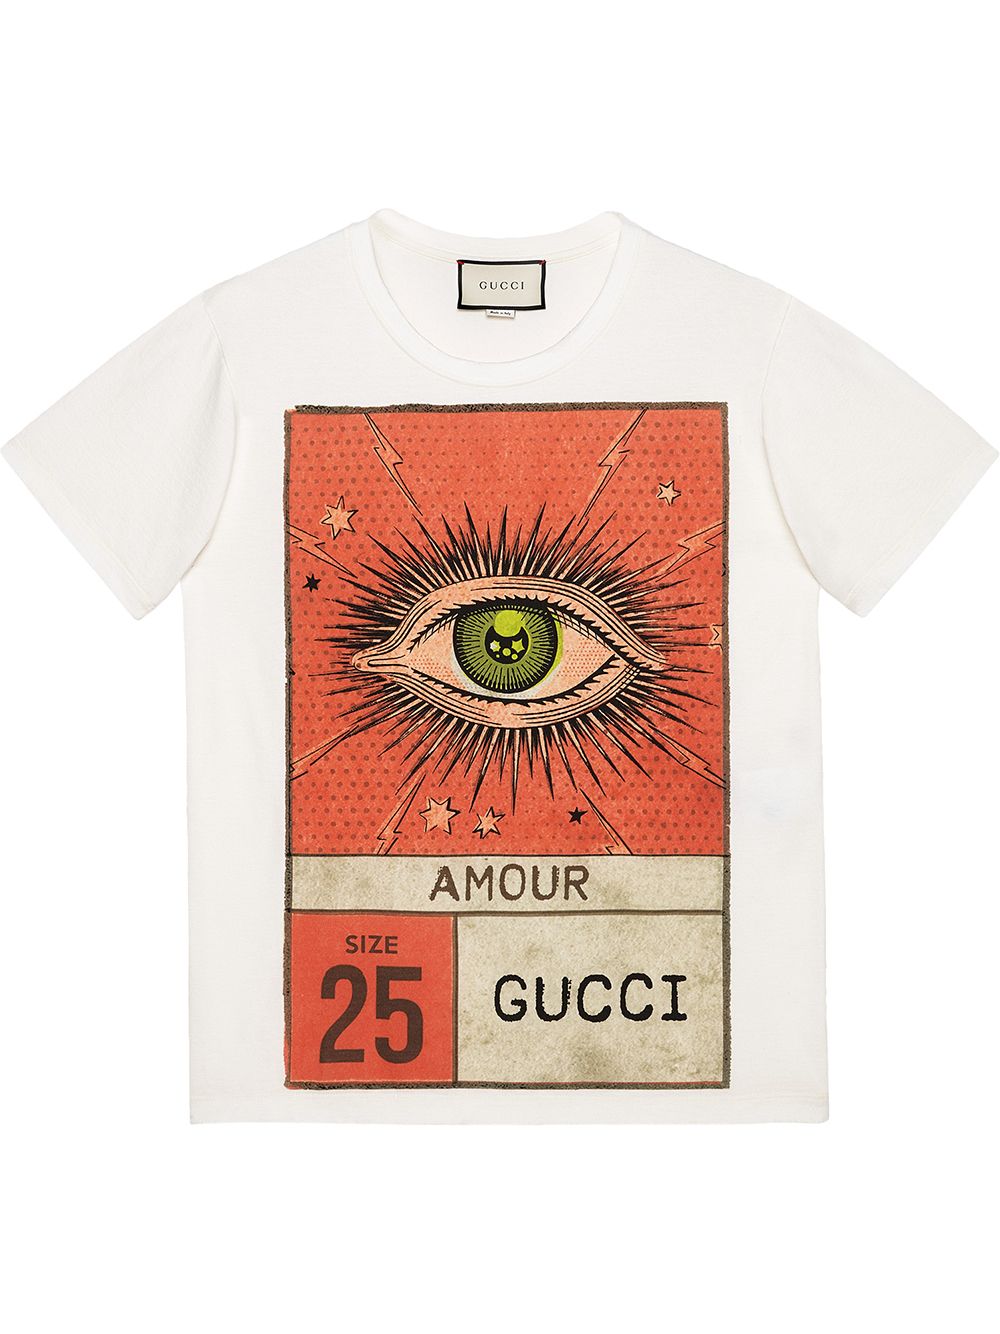 $440 Gucci Amour Eye Print T-shirt 